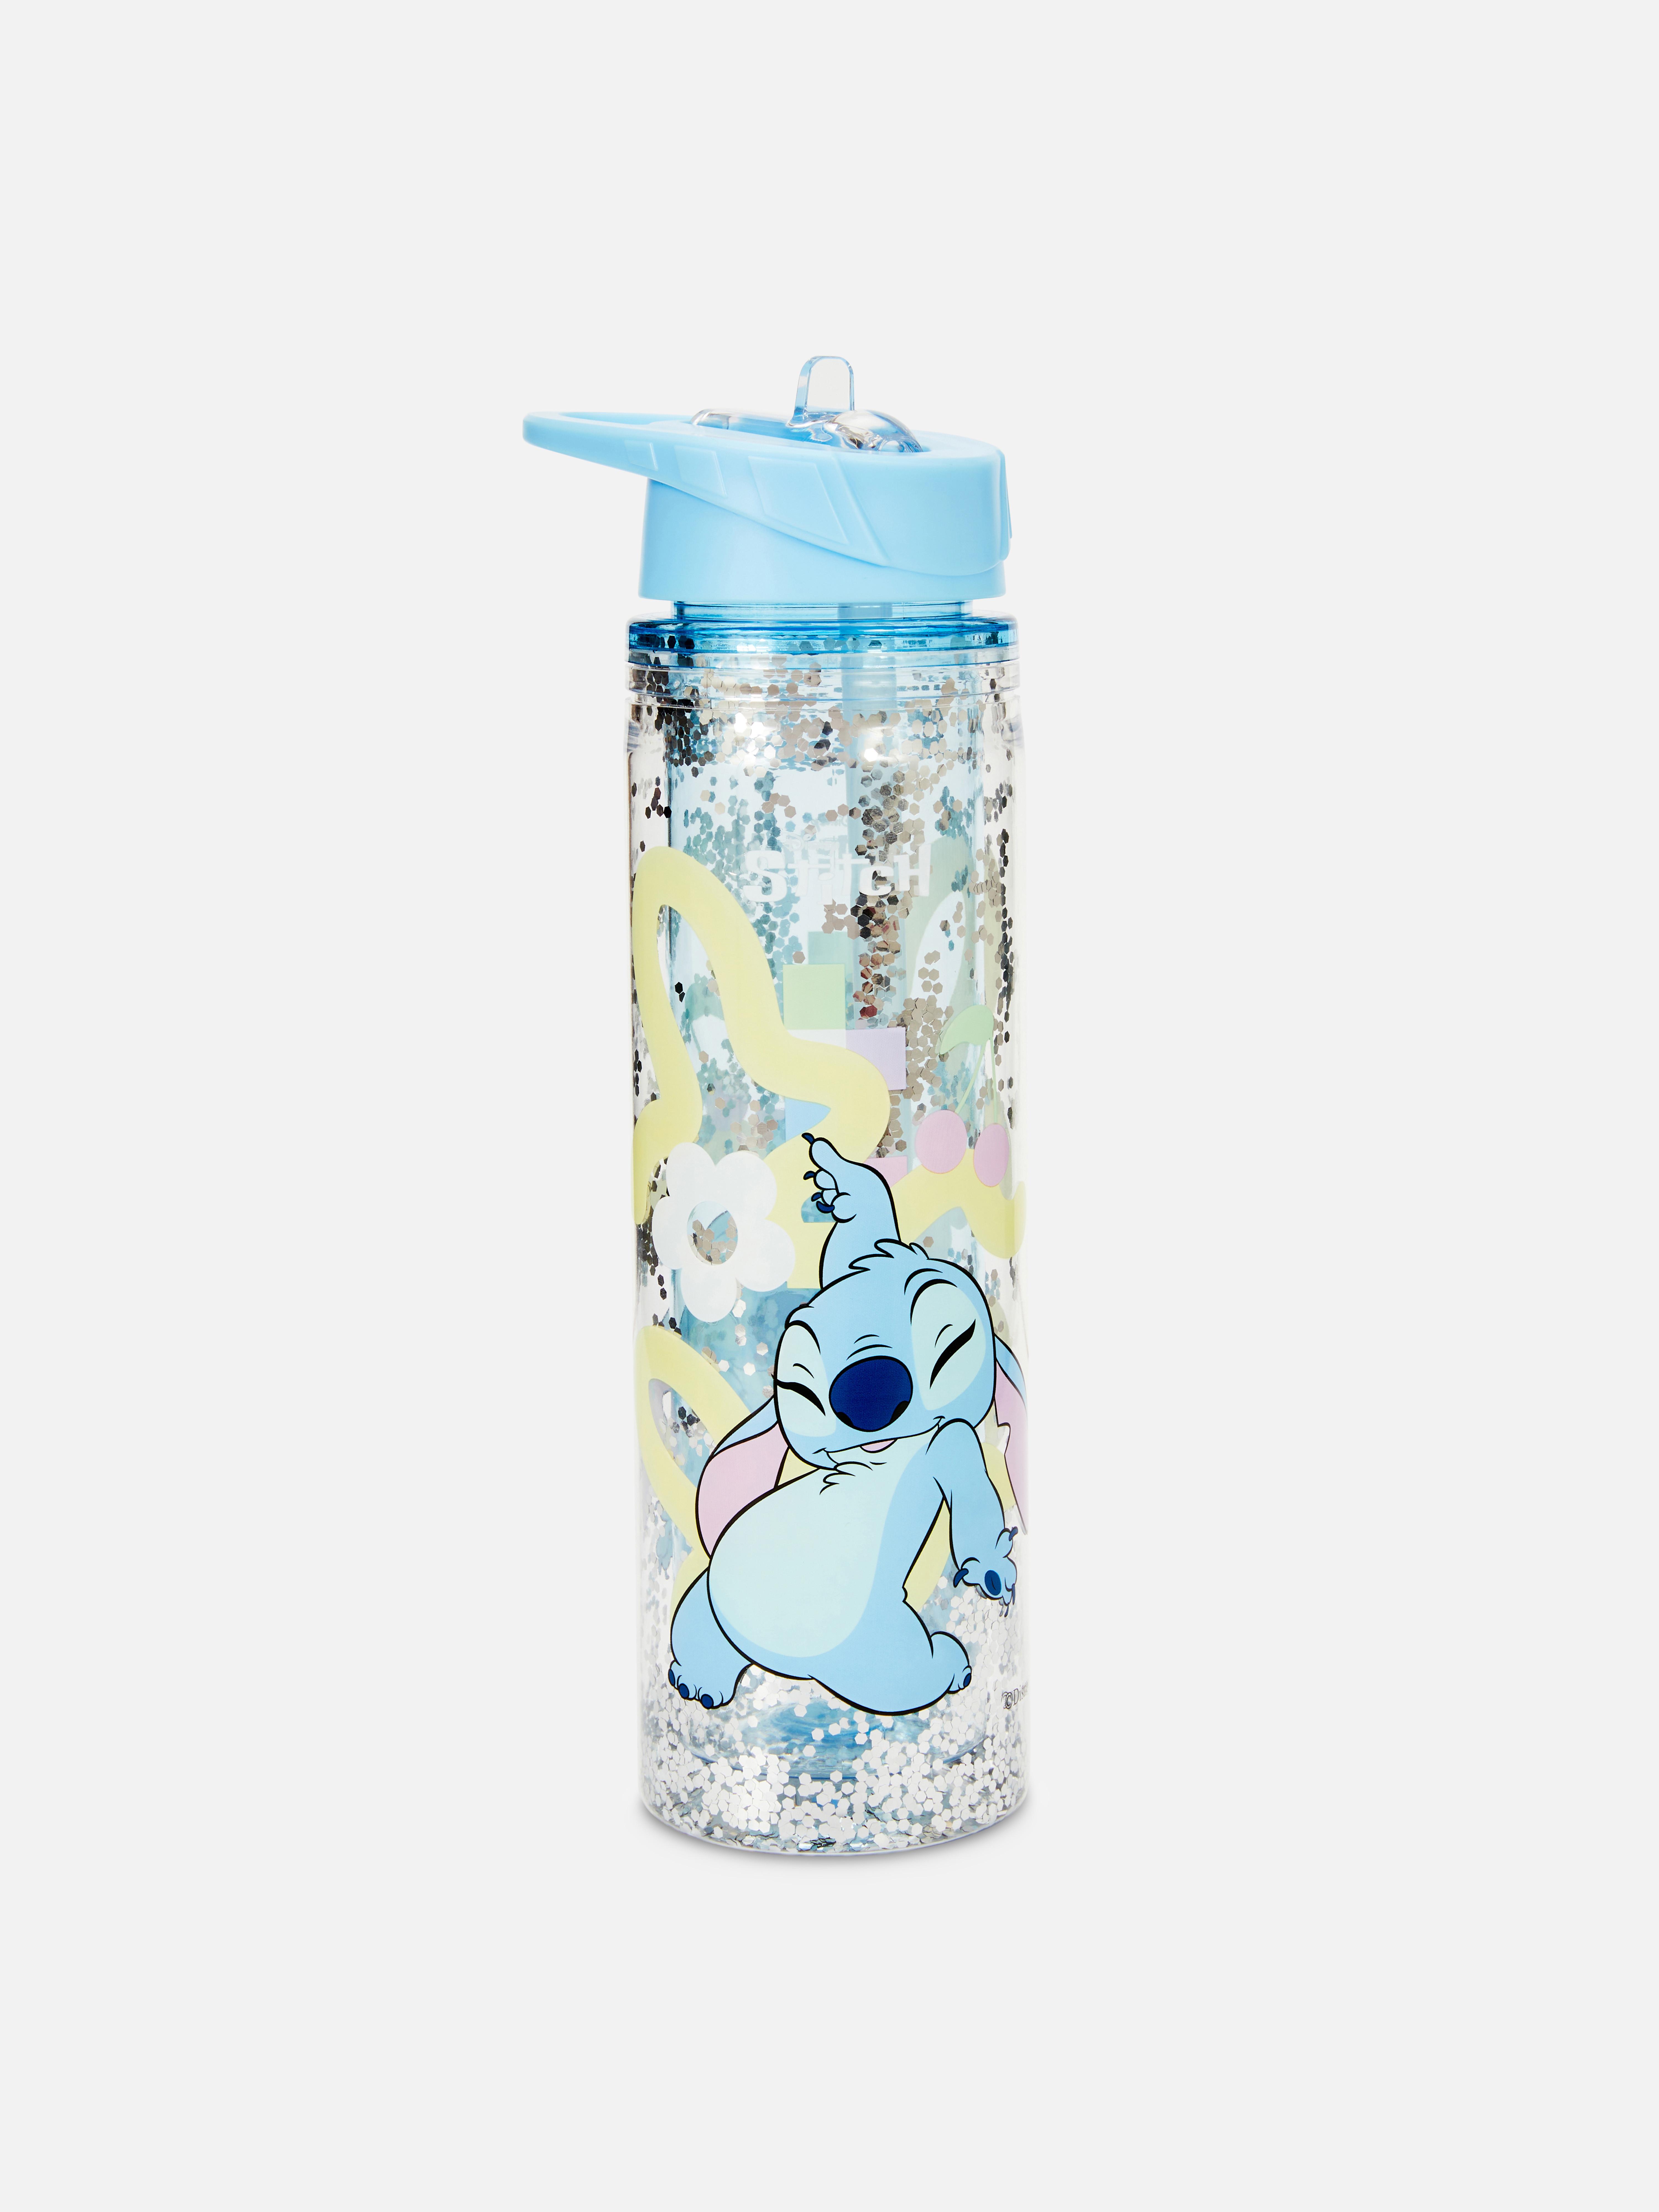 „Disney Lilo & Stitch“ Trinkflasche mit Glitzer